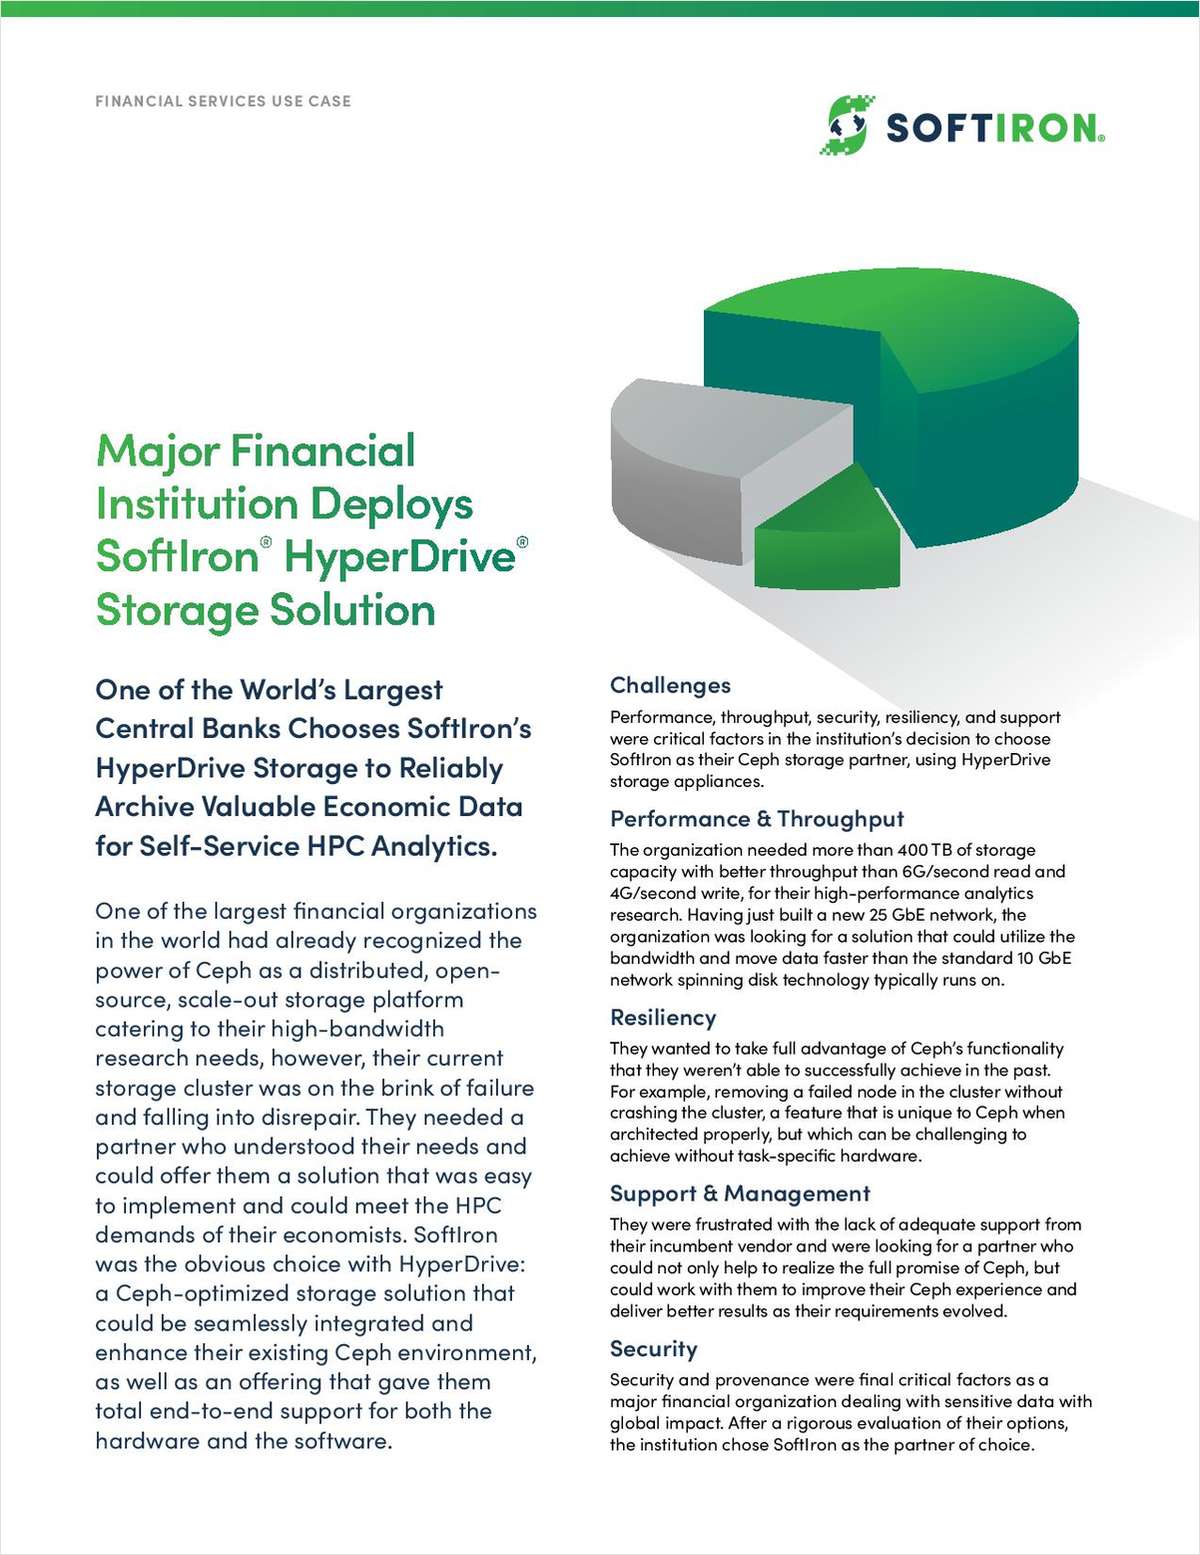 Major Financial Institution Deploys SoftIron HyperDrive Storage Solution